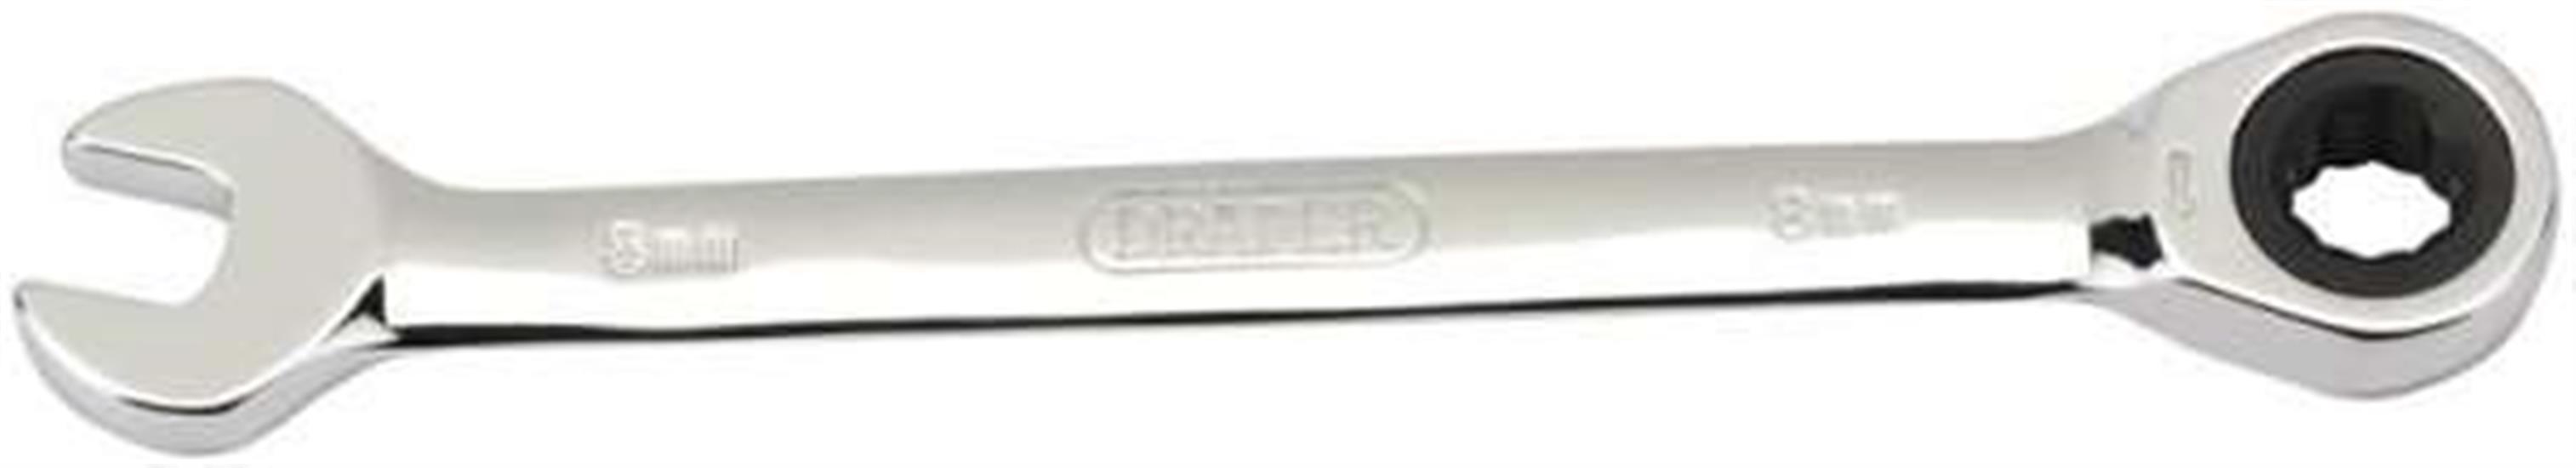 Draper 31005 �MM) - Hi-Torq® 8mm Metric Ratcheting Combination Spanner